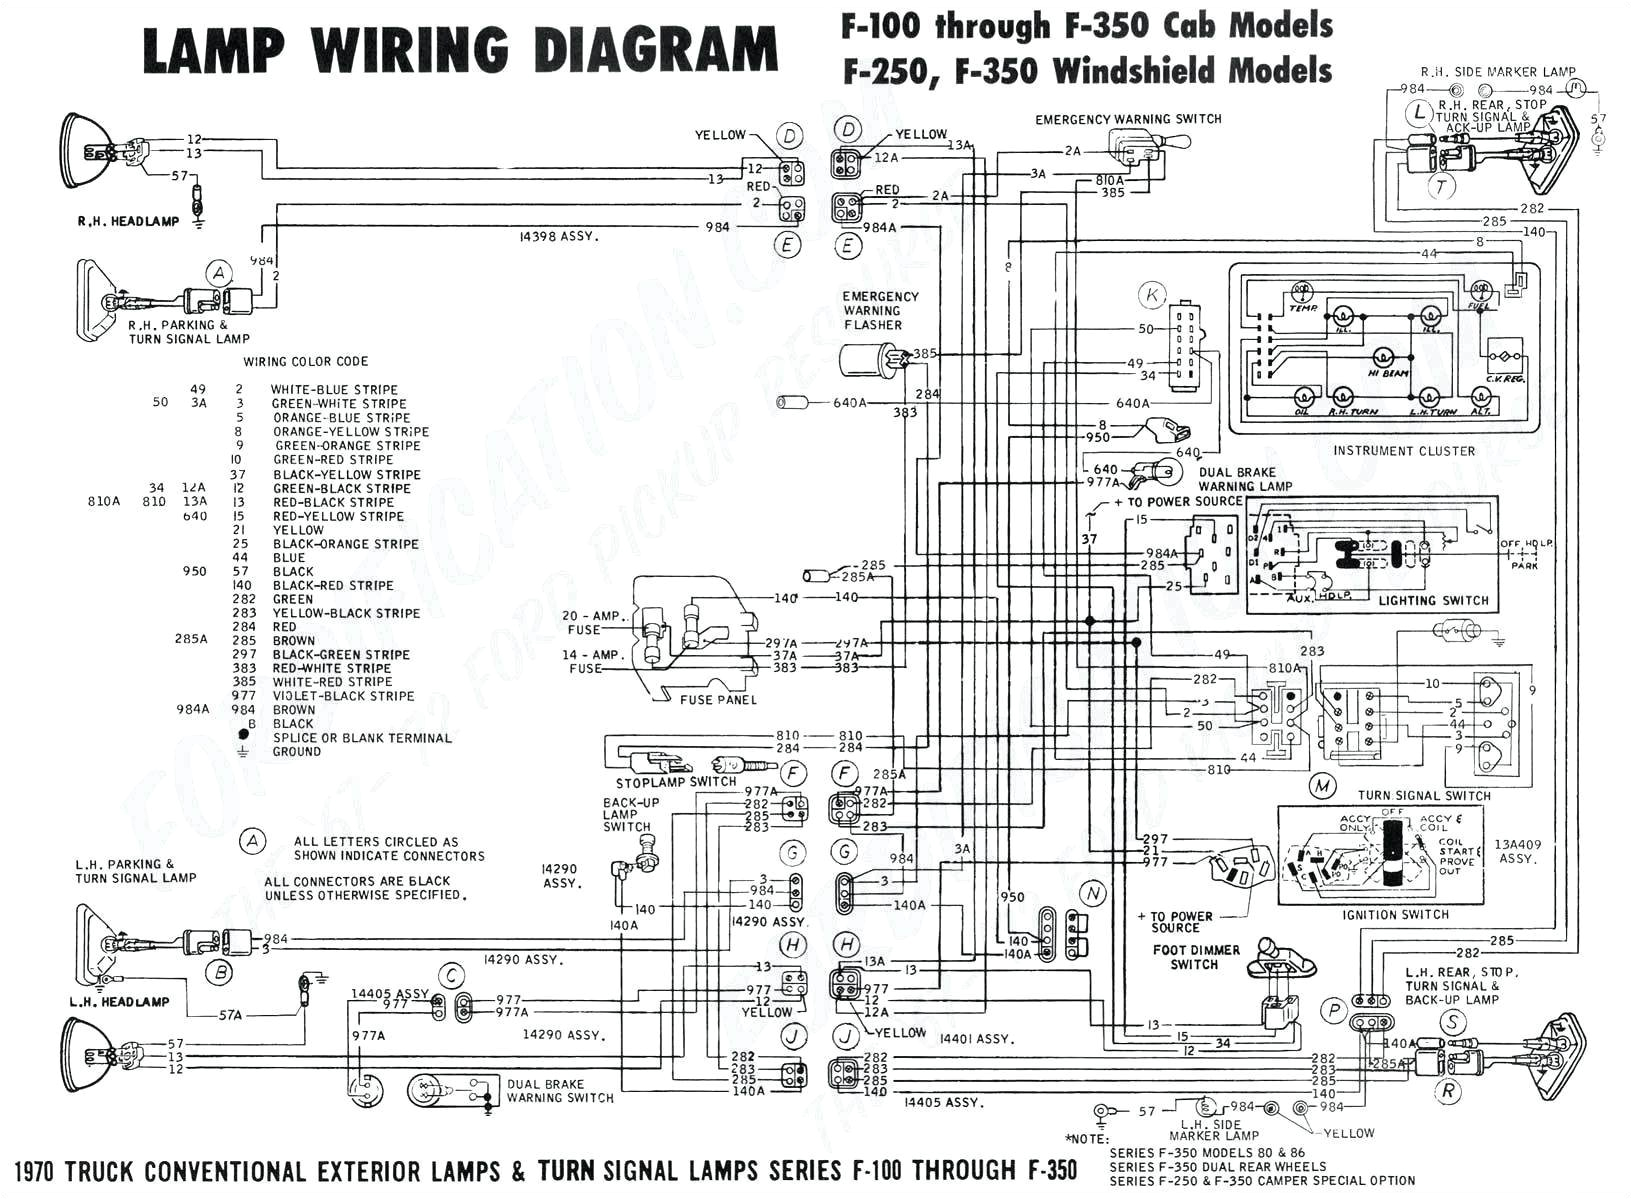 bad wiring diagram free picture schematic wiring diagram blog bad wiring diagram free picture schematic